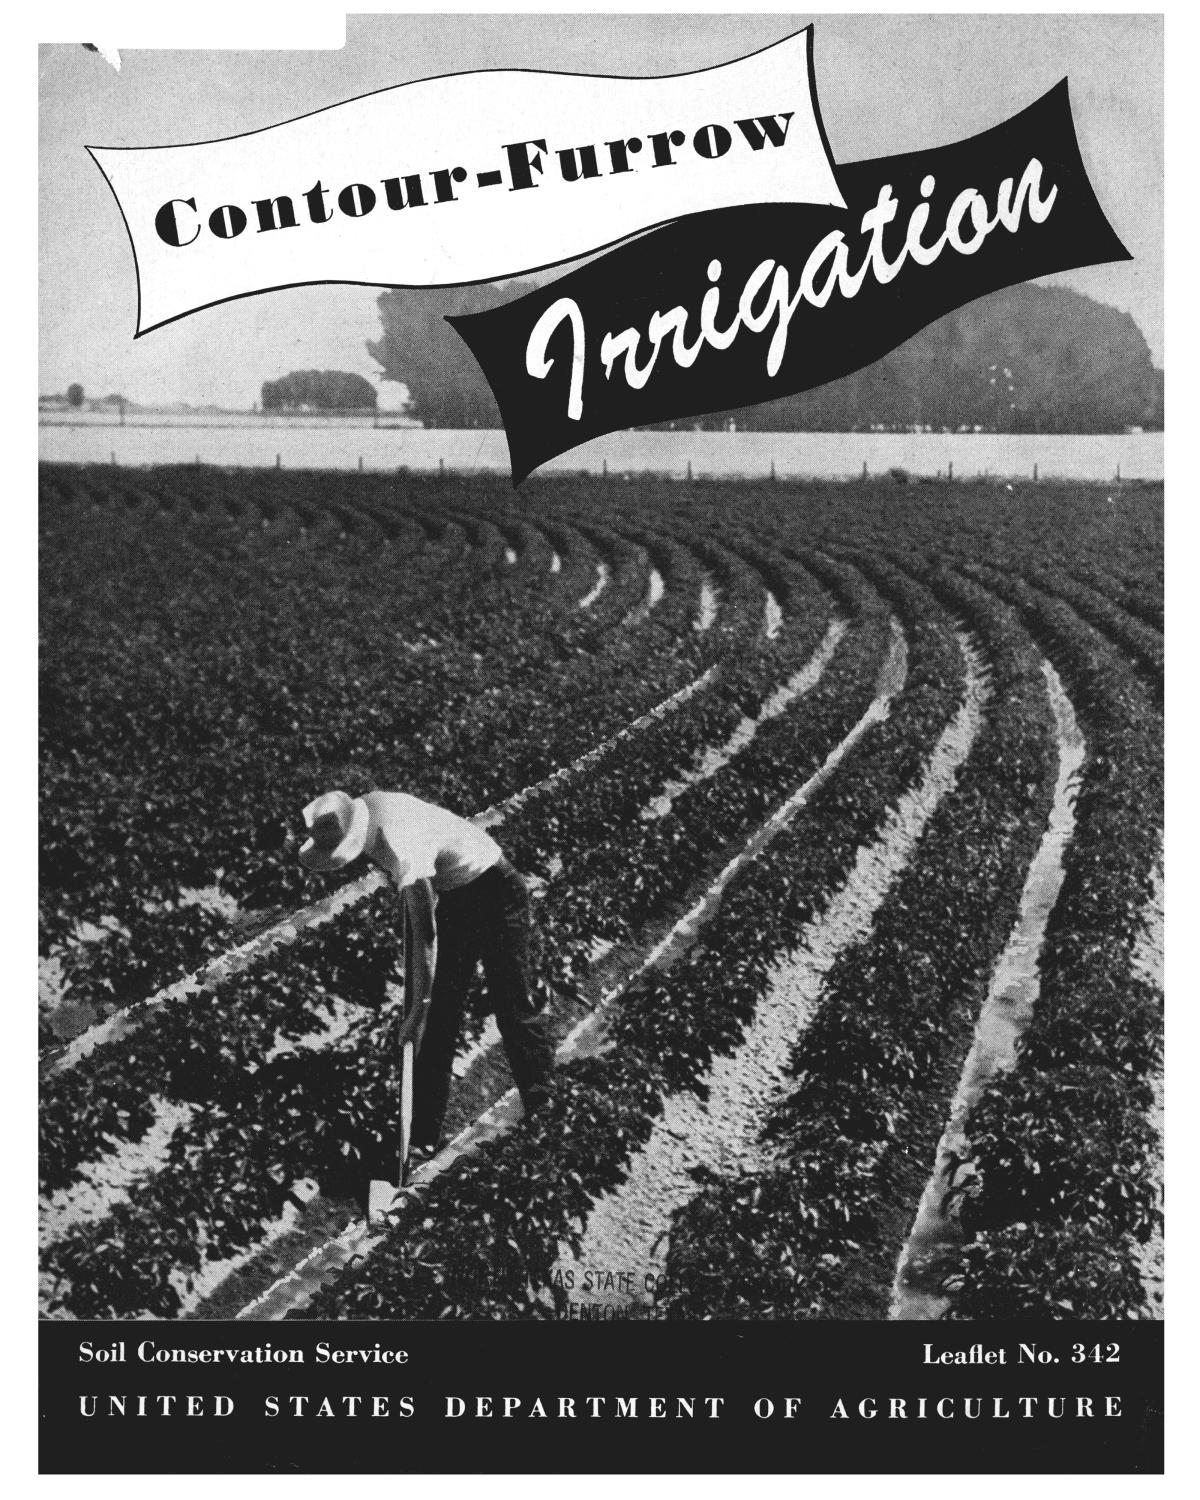 furrow irrigation